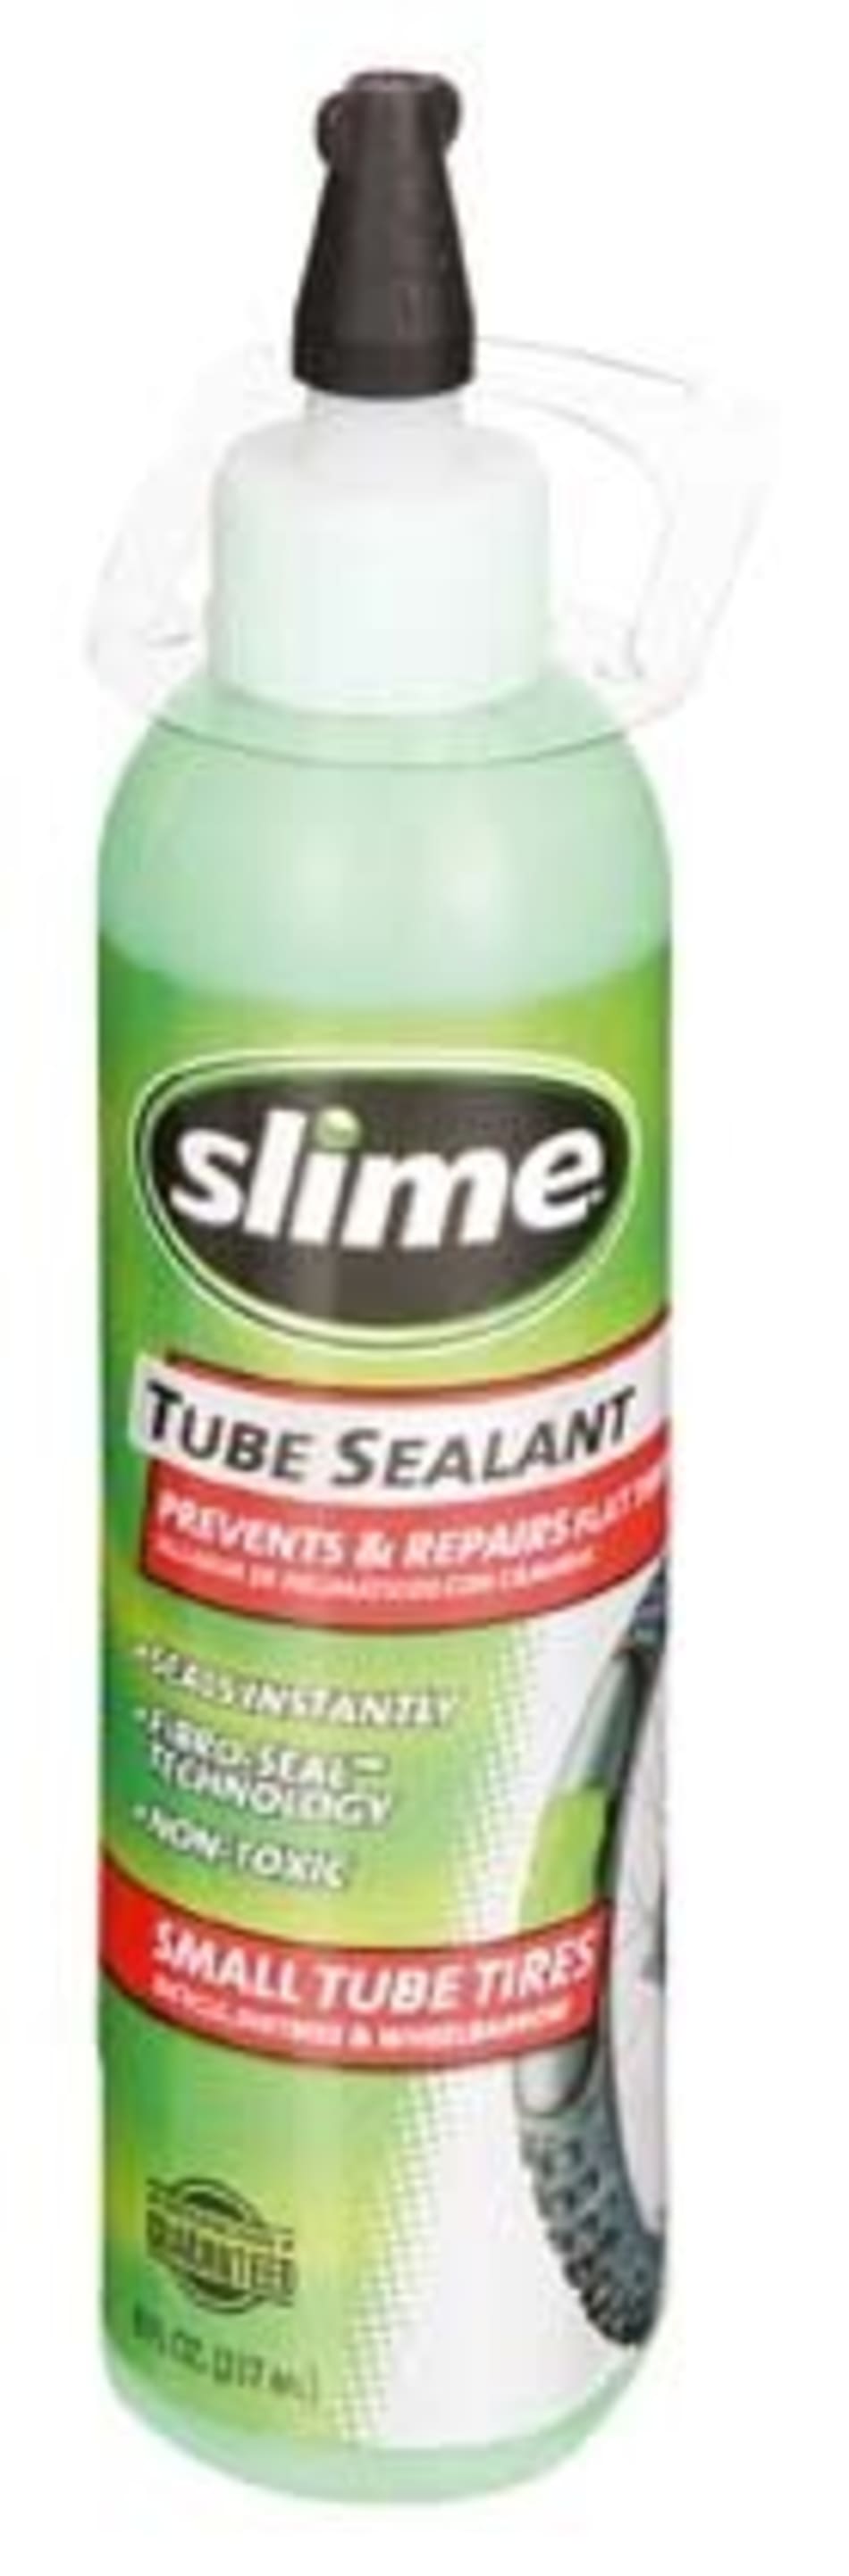 slime tube sealant near me